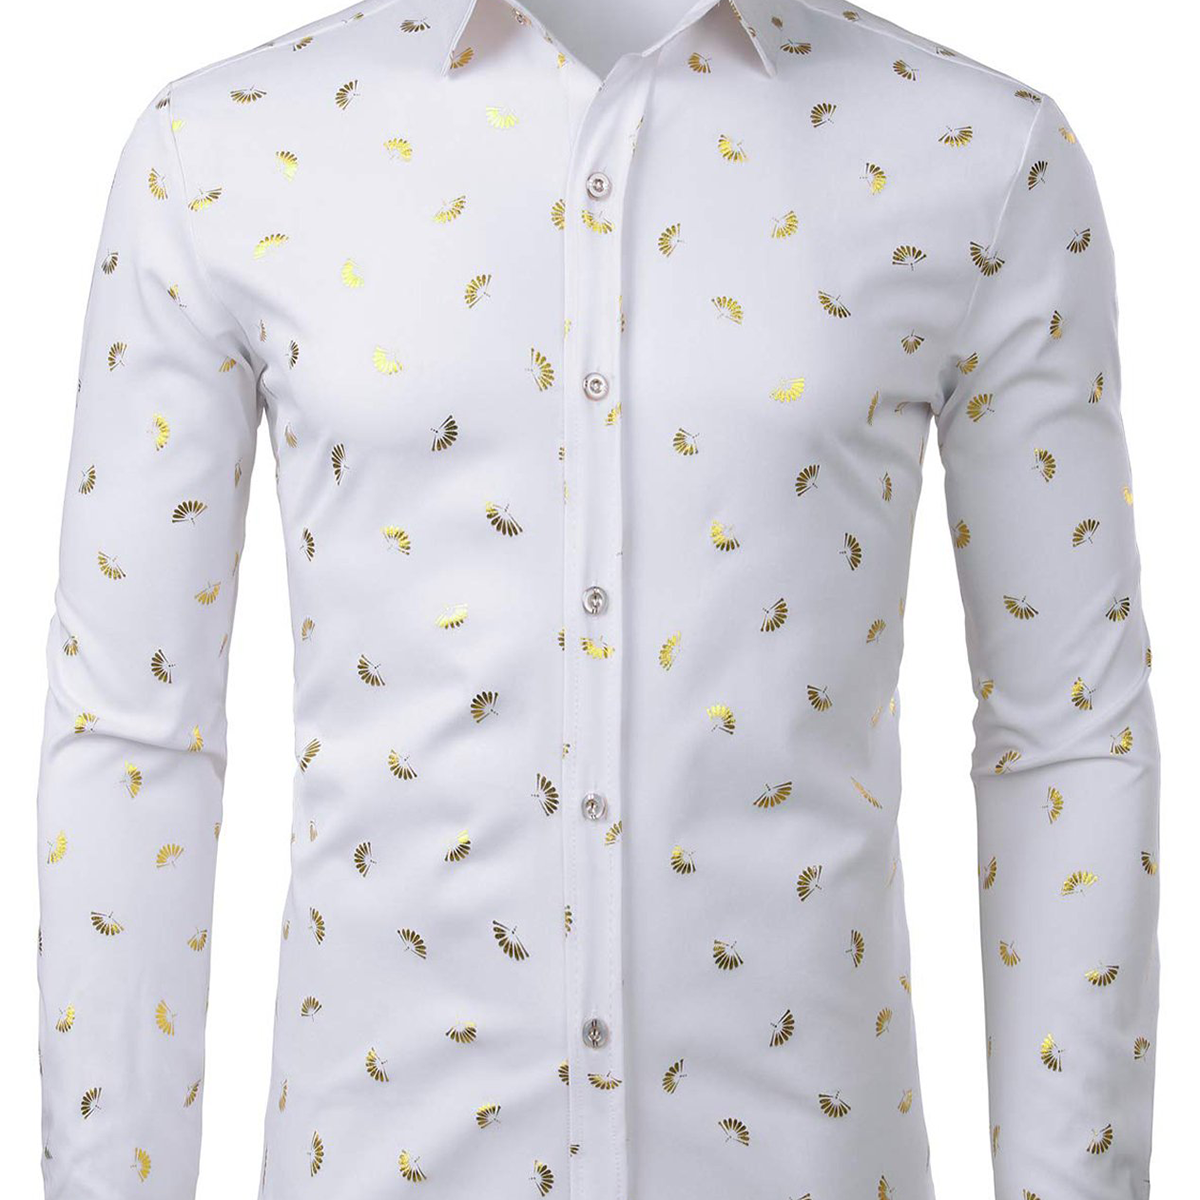 Men's Long Sleeve Regular Fit Casual Floral Print Shirt